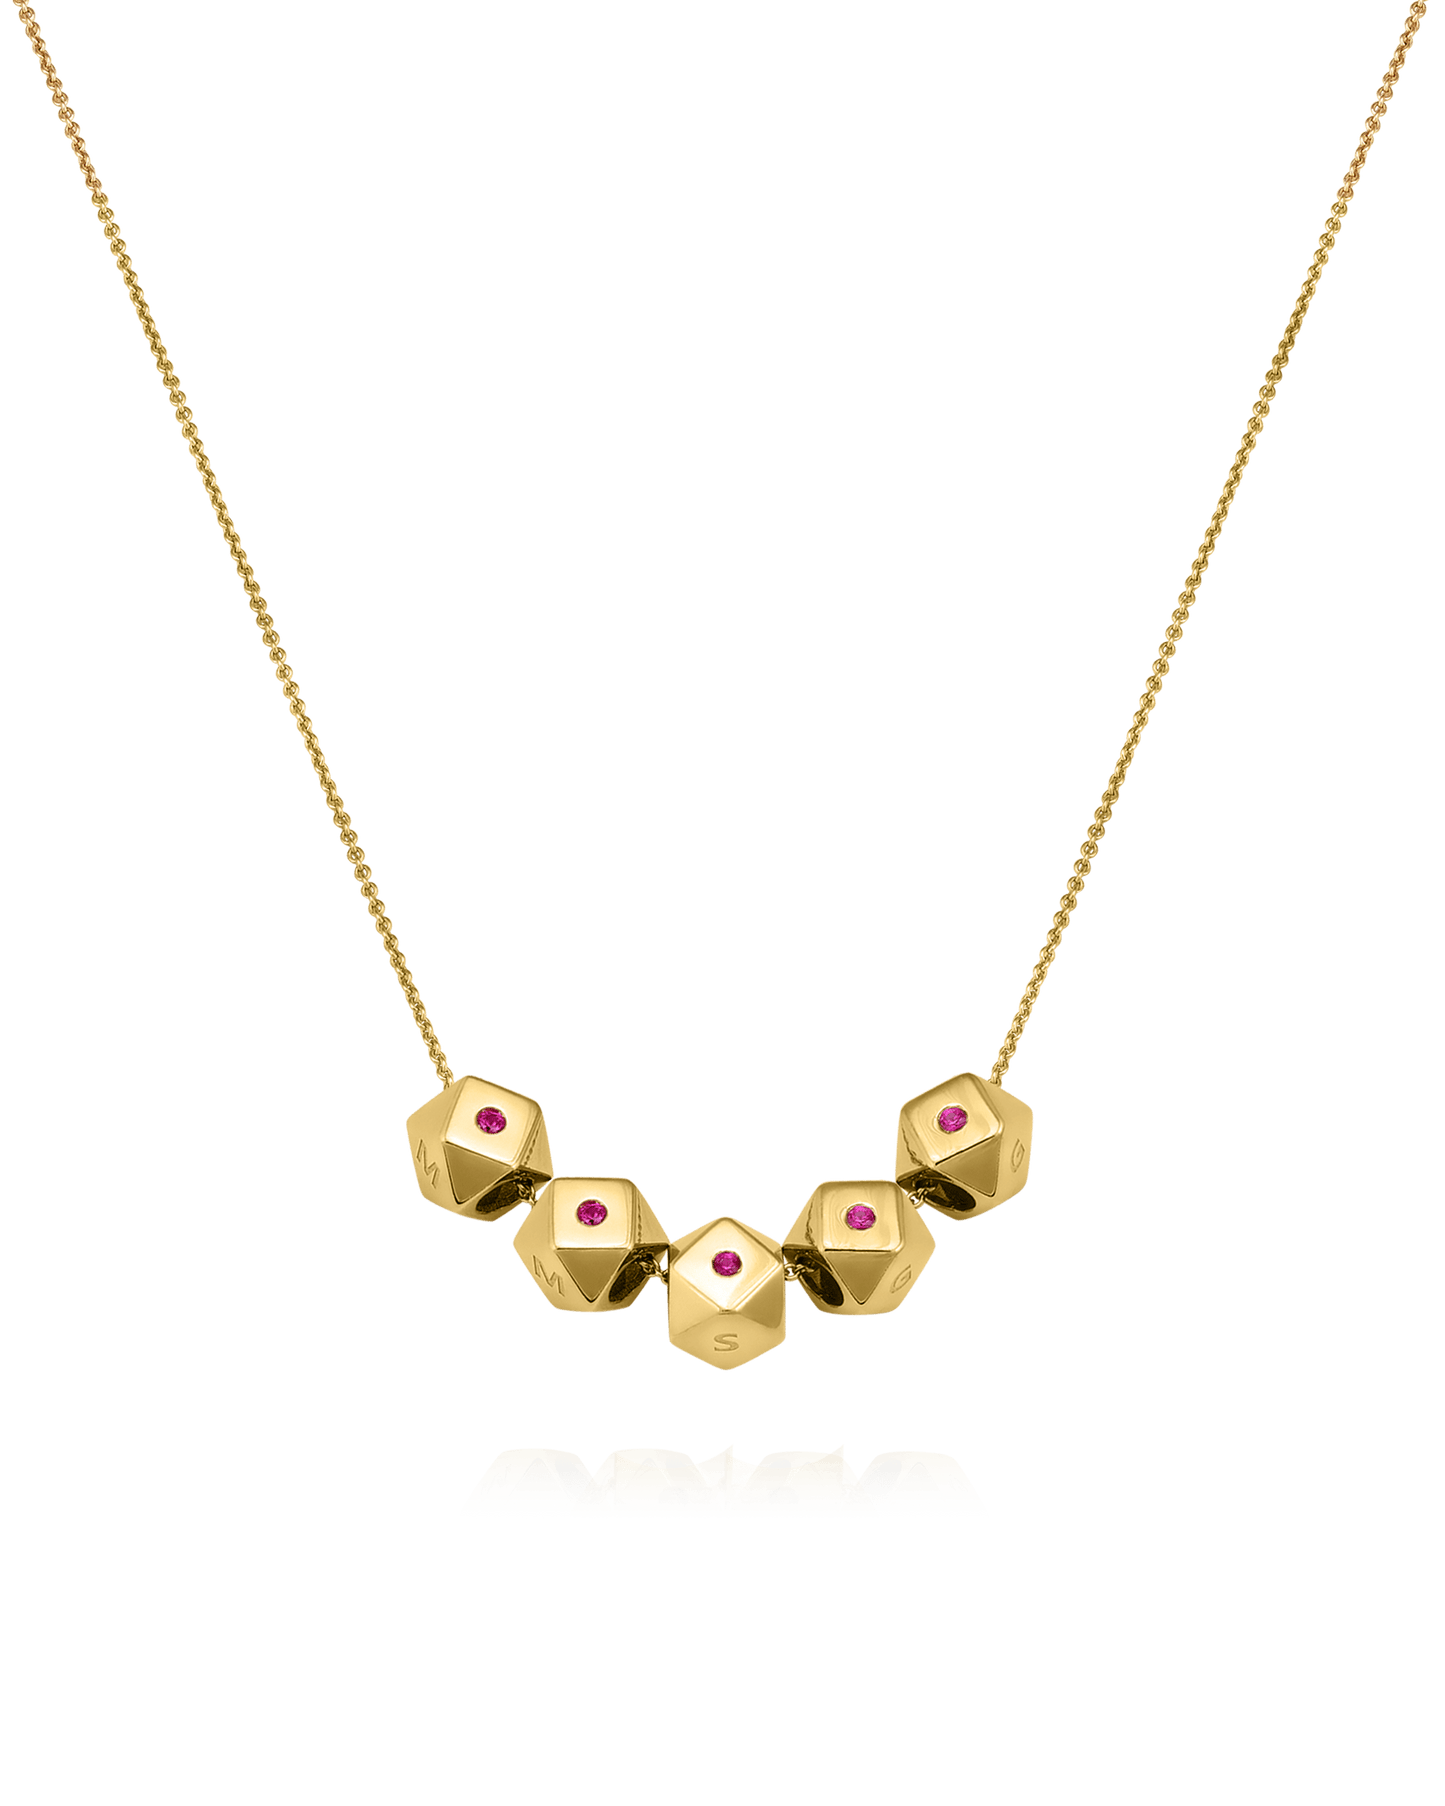 Hedra Necklace - 18K Gold Vermeil Necklaces magal-dev 5 Charms 16”+2” extender 